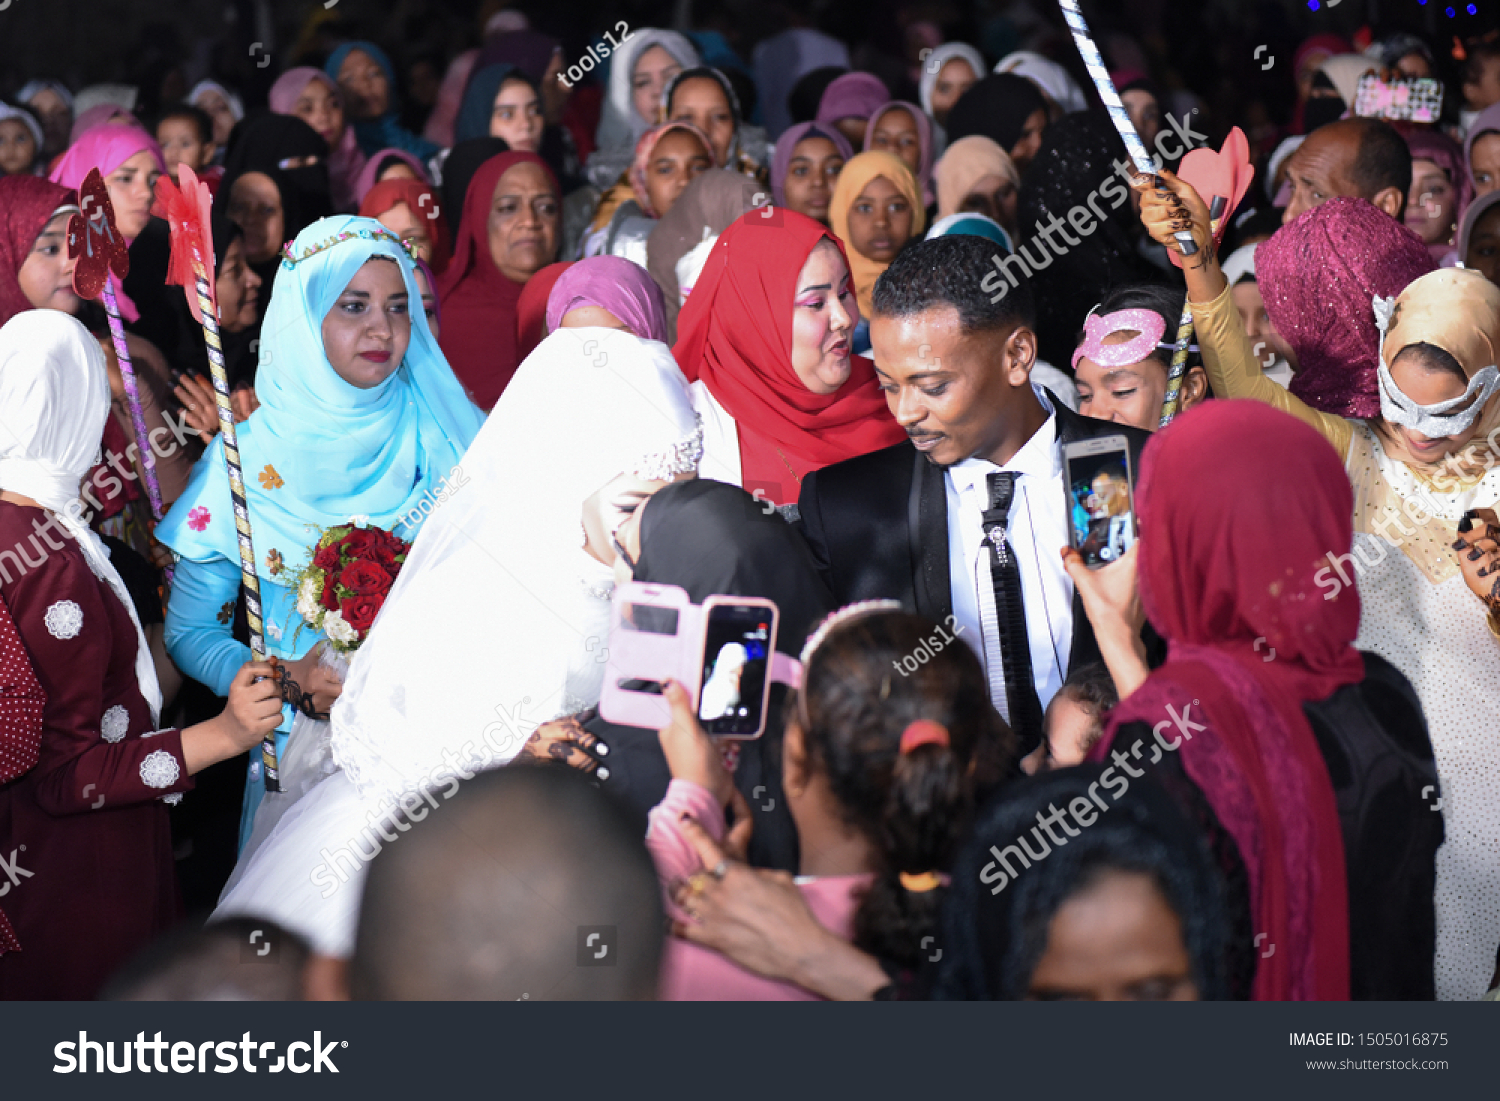 A celebration of Egyptian wedding  - location luxor - egypt 
21/9/2018 #1505016875